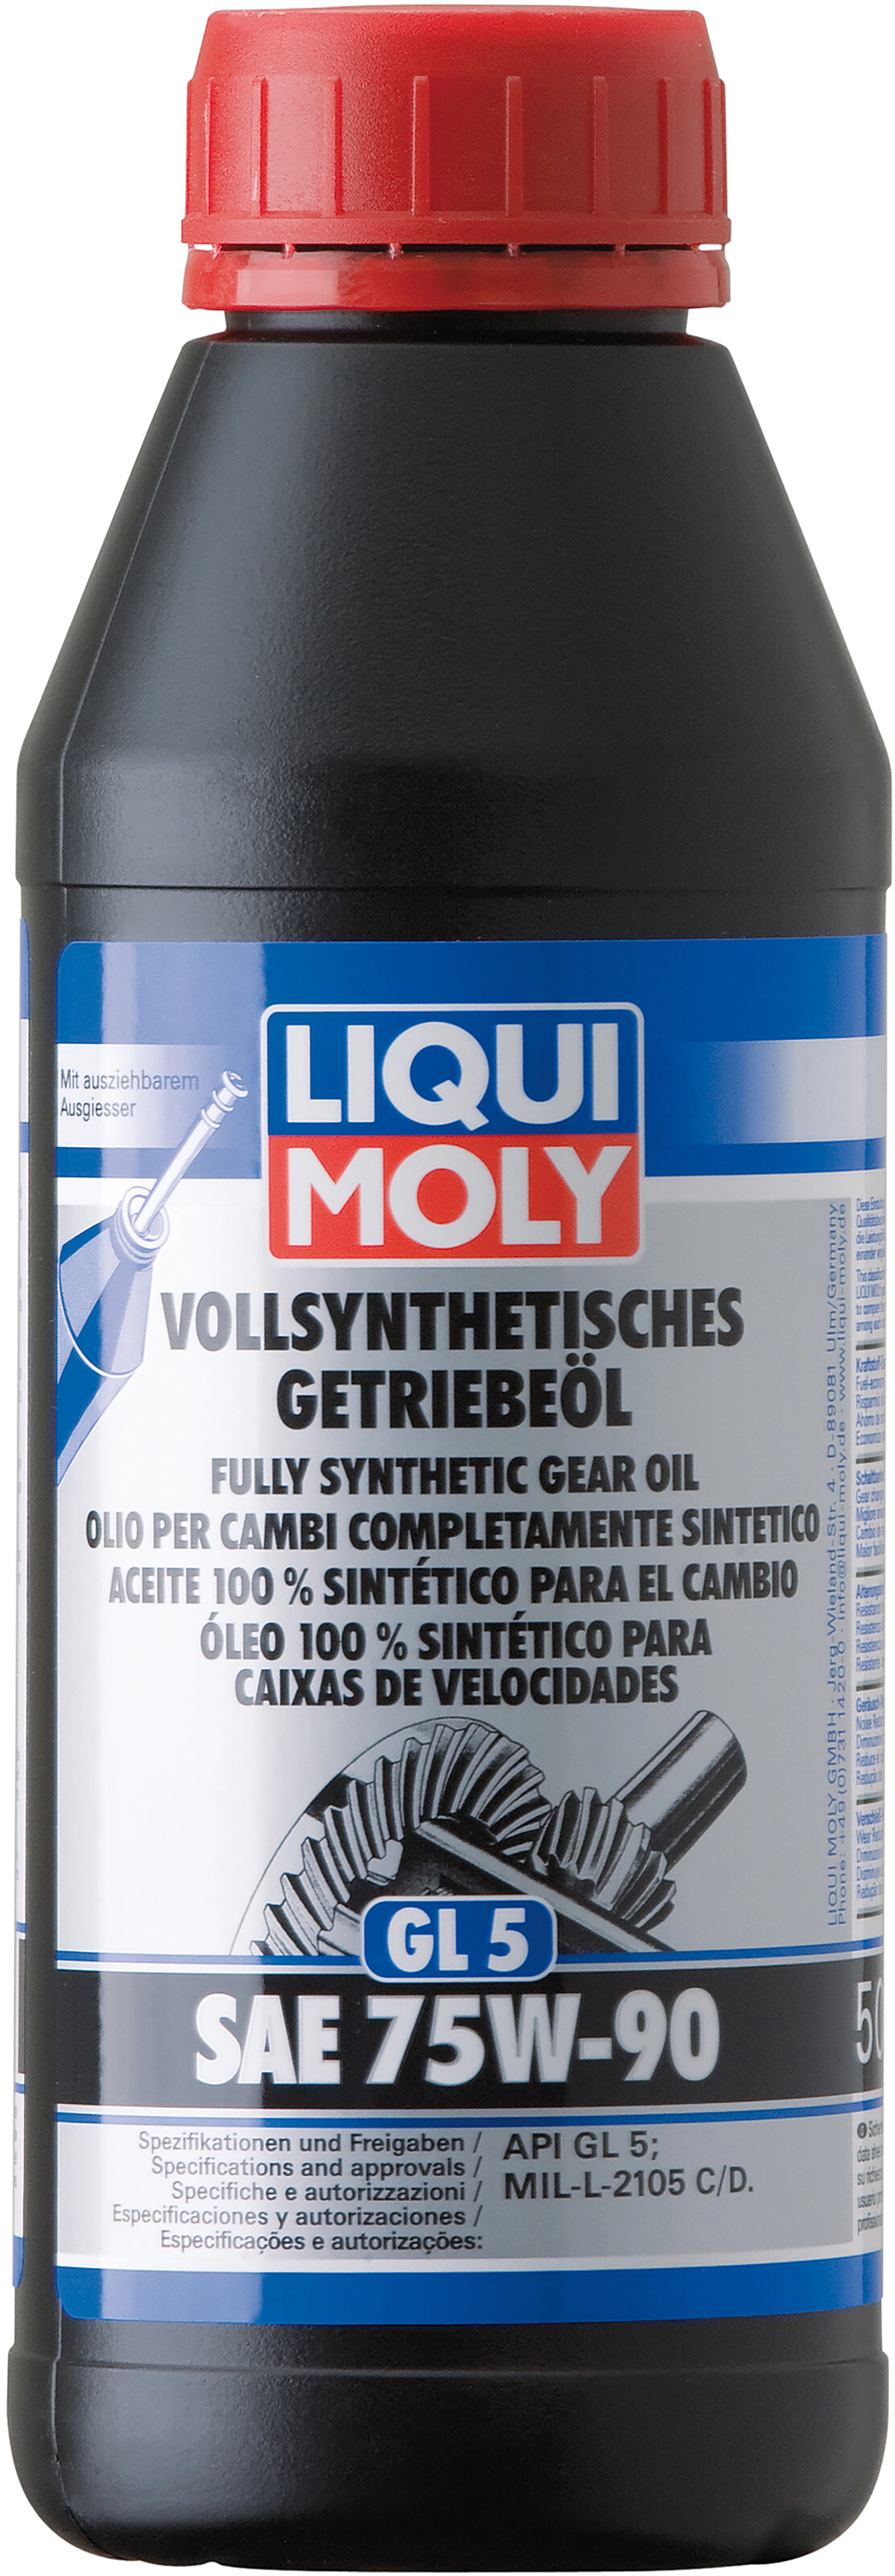 Liqui Moly Vollsynthetisches Getriebeöl (GL 5) SAE 75W-90 0,5 l kaufen bei  OBI